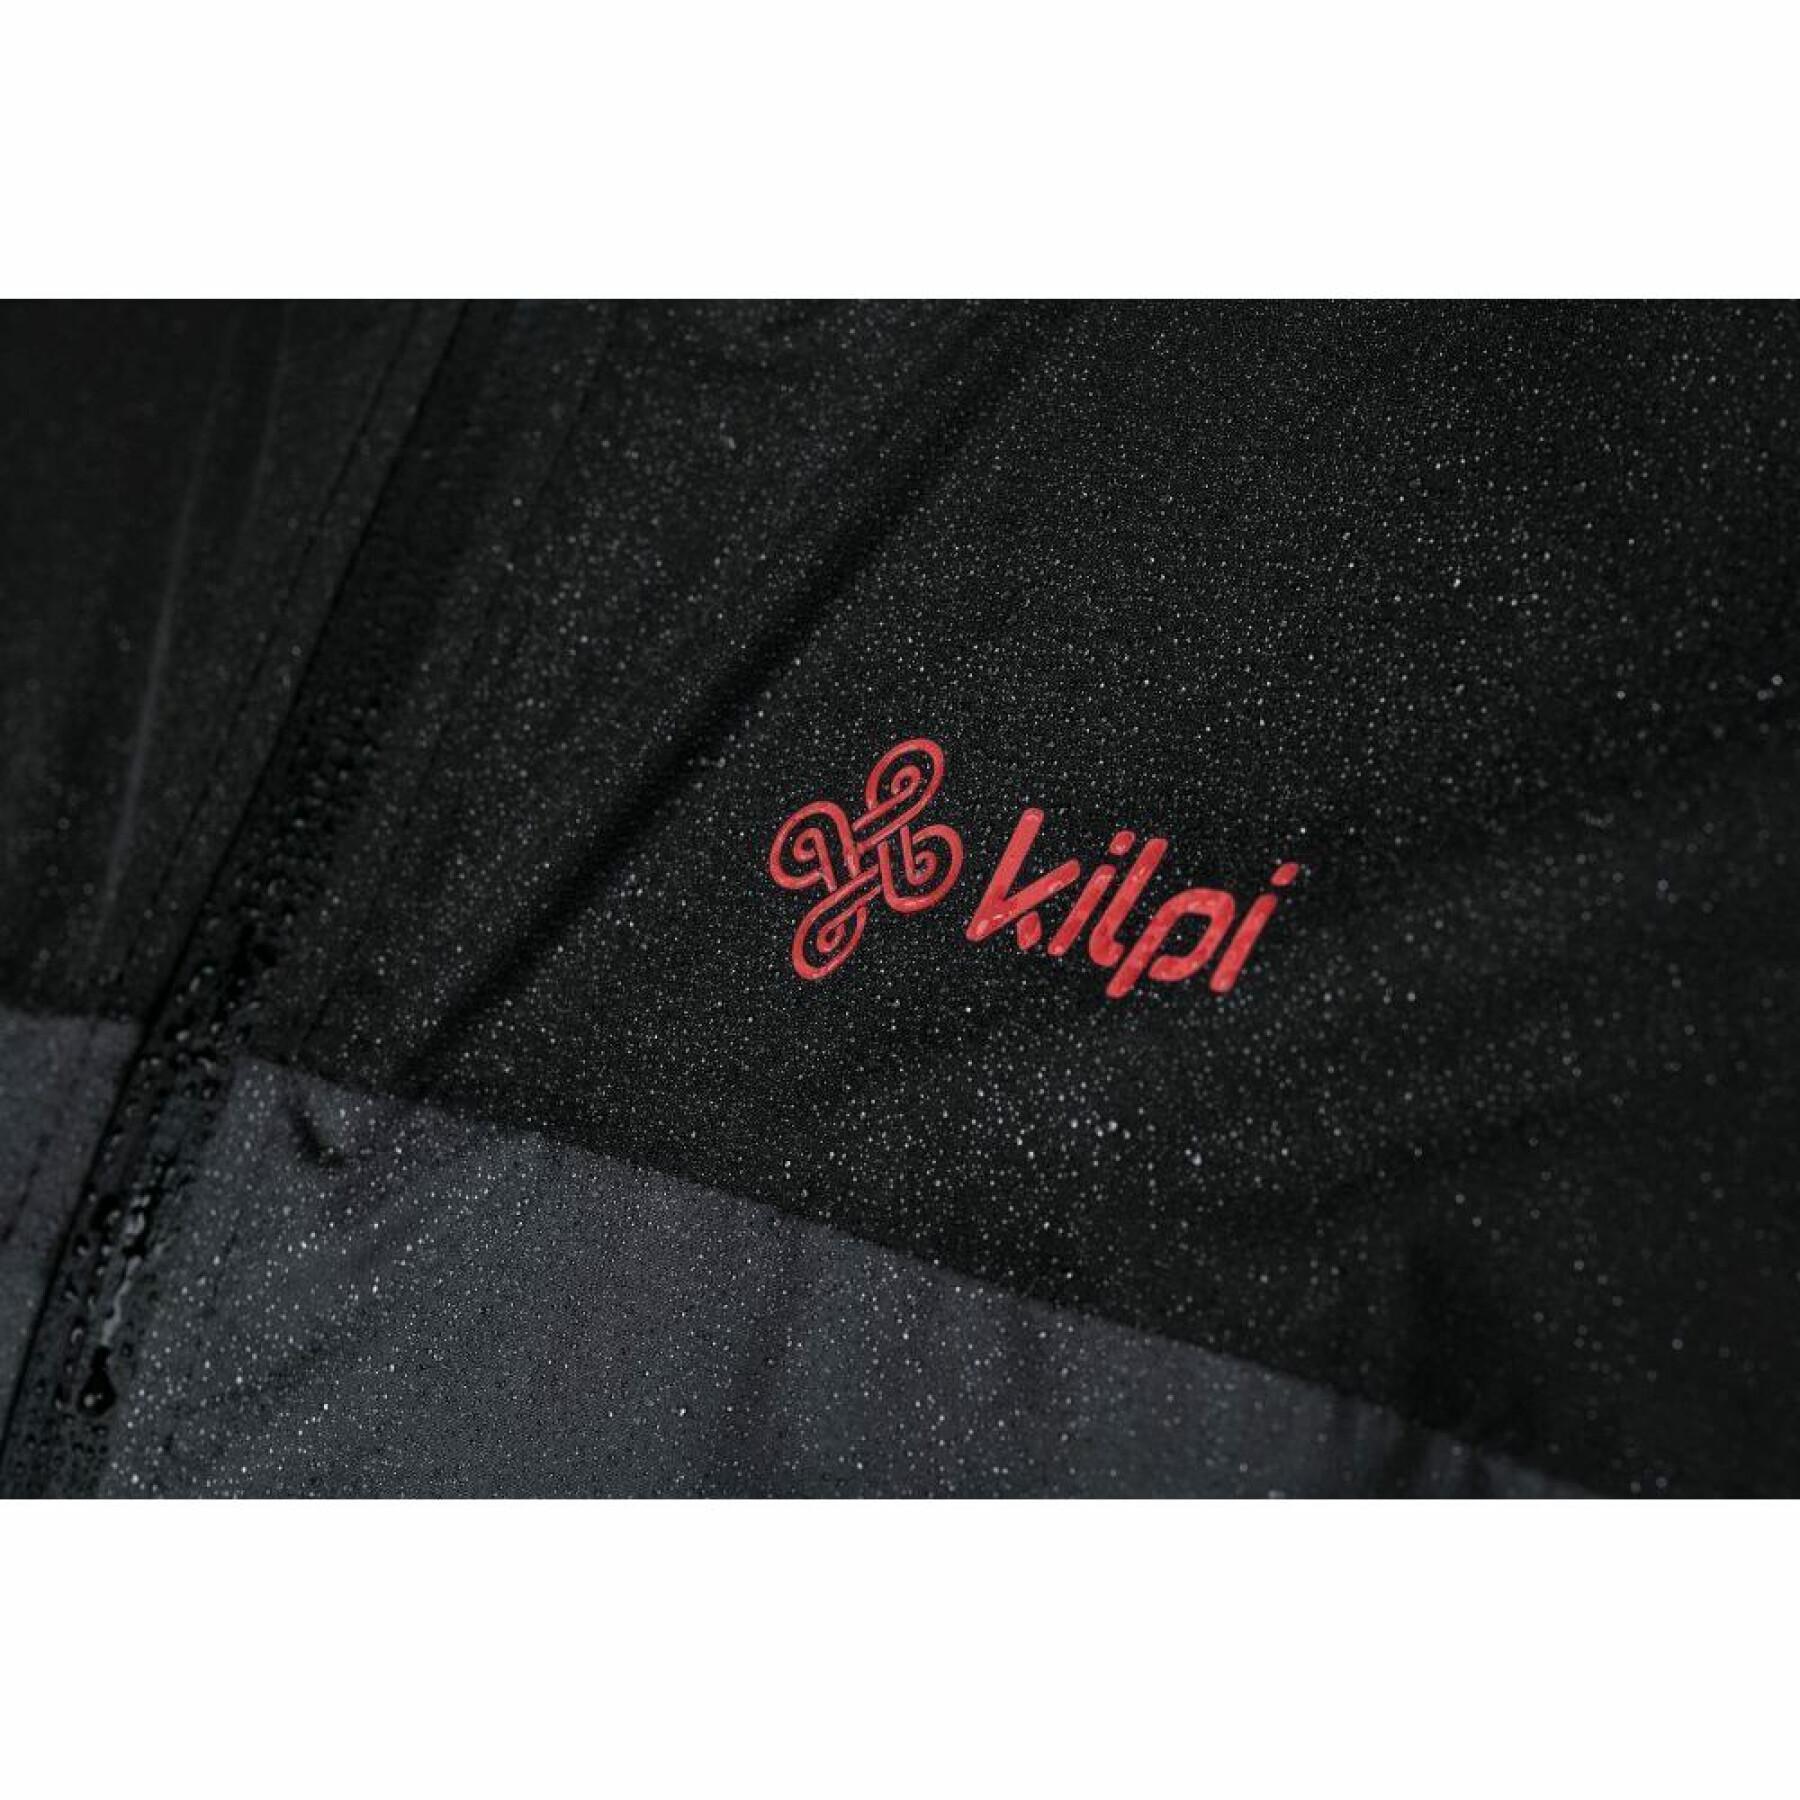 Women's waterproof jacket Kilpi Hurricane